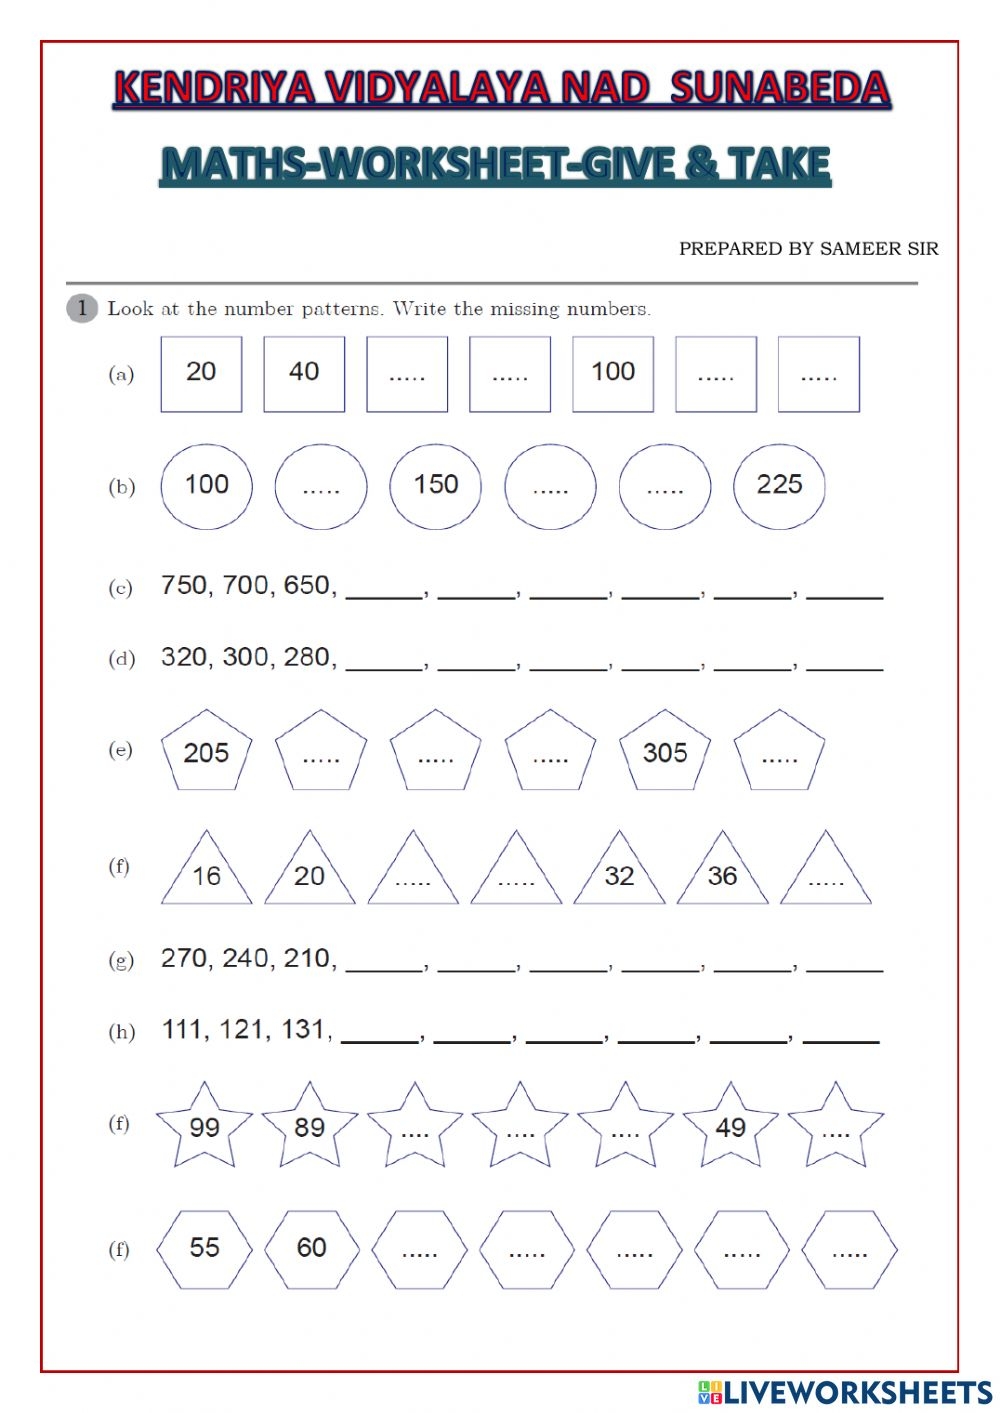 class-3-worksheet-maths-give-take-worksheet-math-worksheet-answers